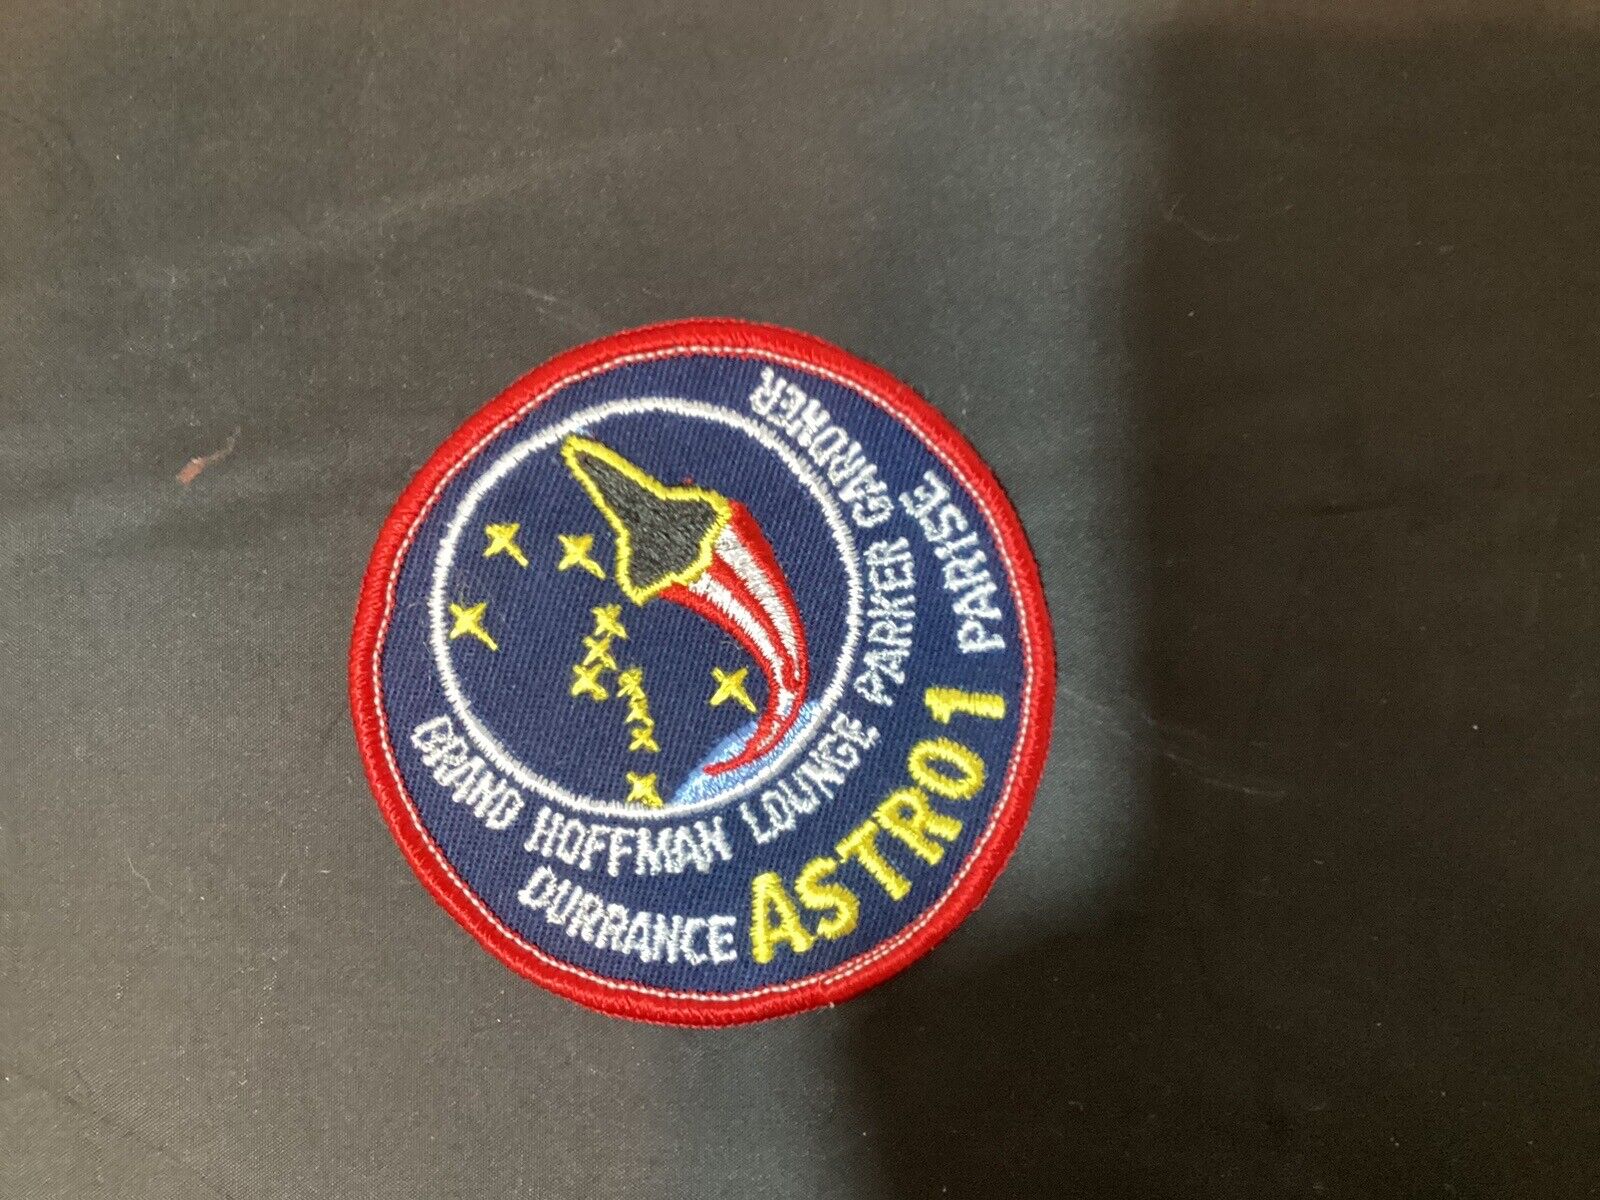 Brand Hoffman Lounge Parker Gardner Durrance Parise Astro 1 Patch Badge NASA